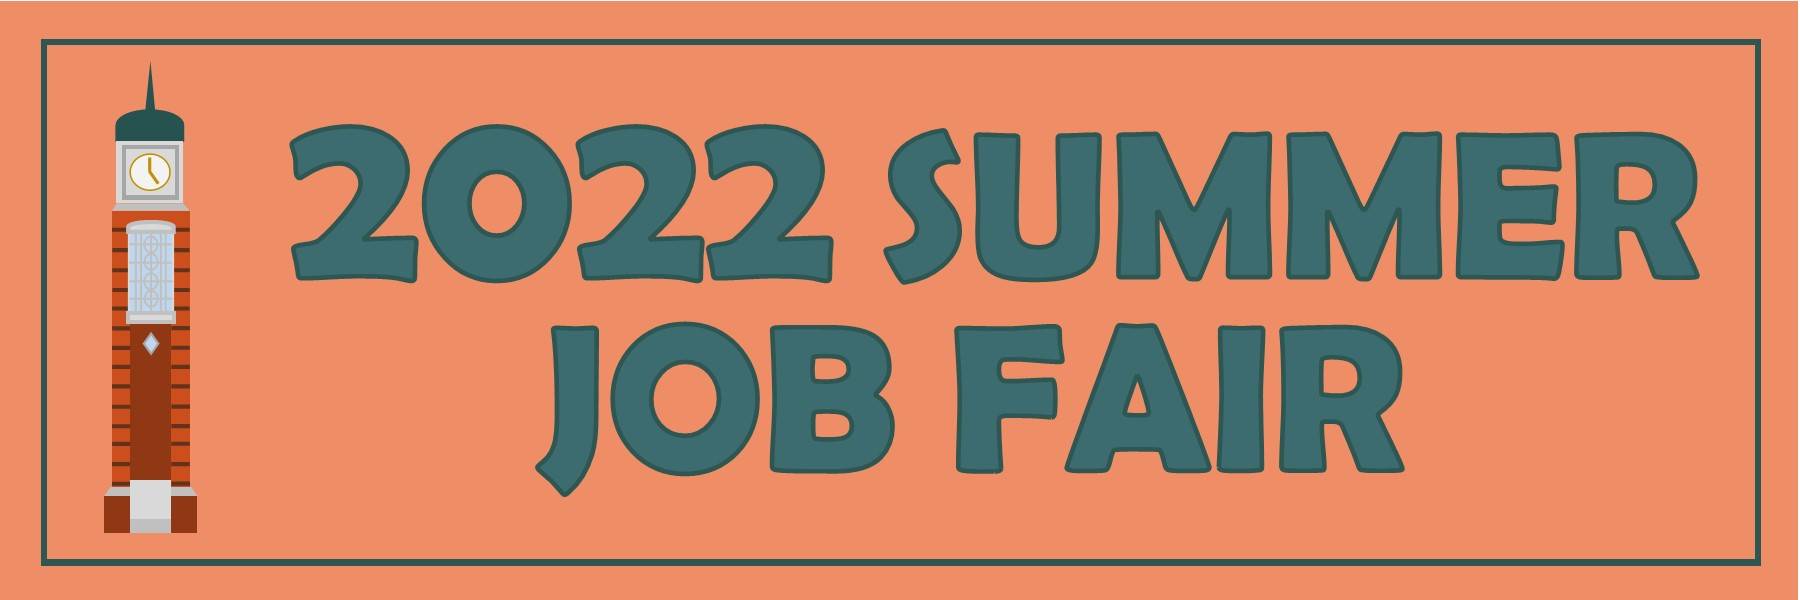 2022 Summer Job Fair